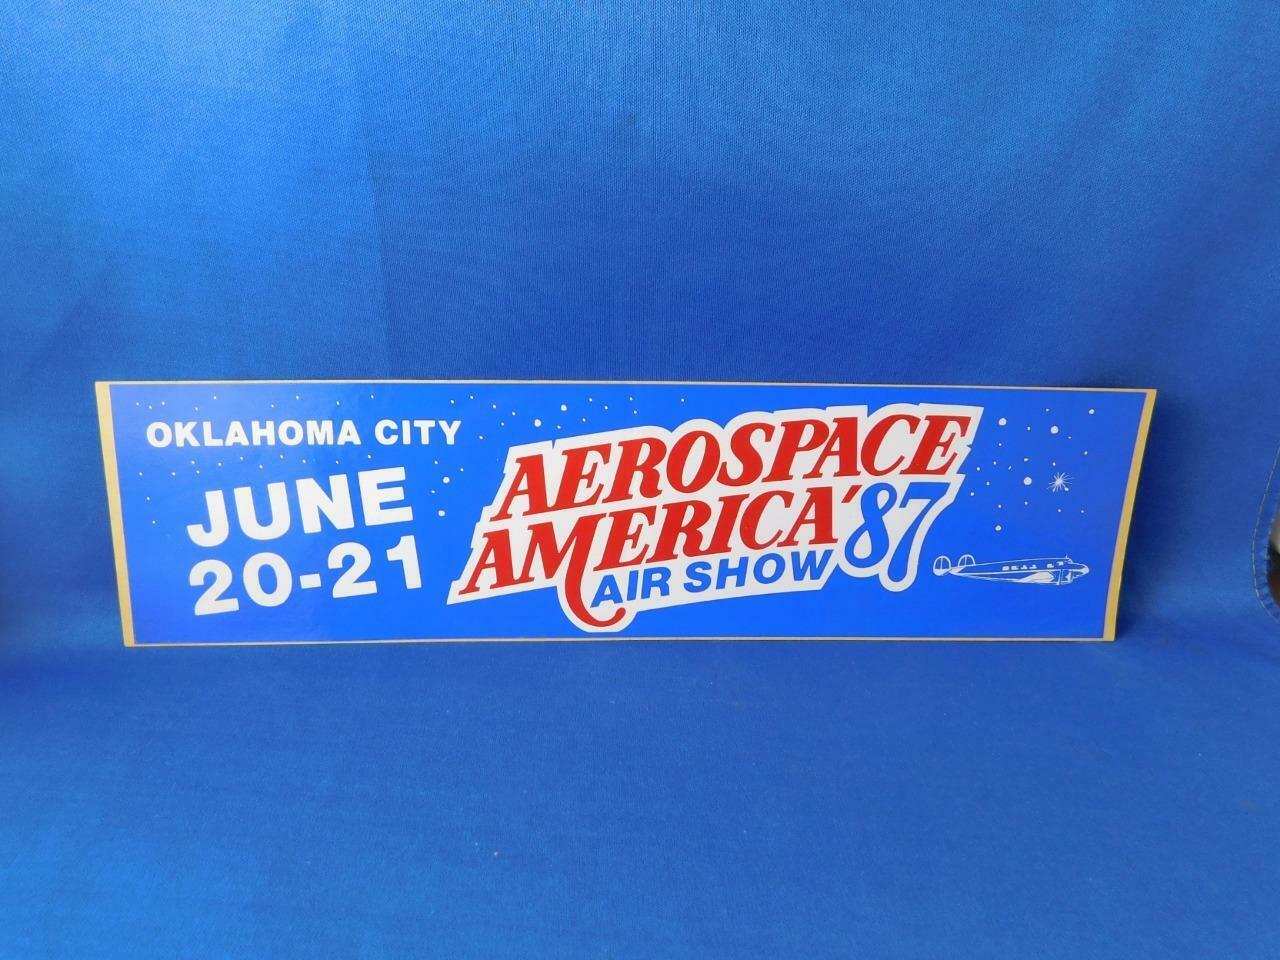 AEROSPACE AMERICA AIR SHOW 1987 ADVERTISING BUMPER STICKER DECAL OKLAHOMA CITY